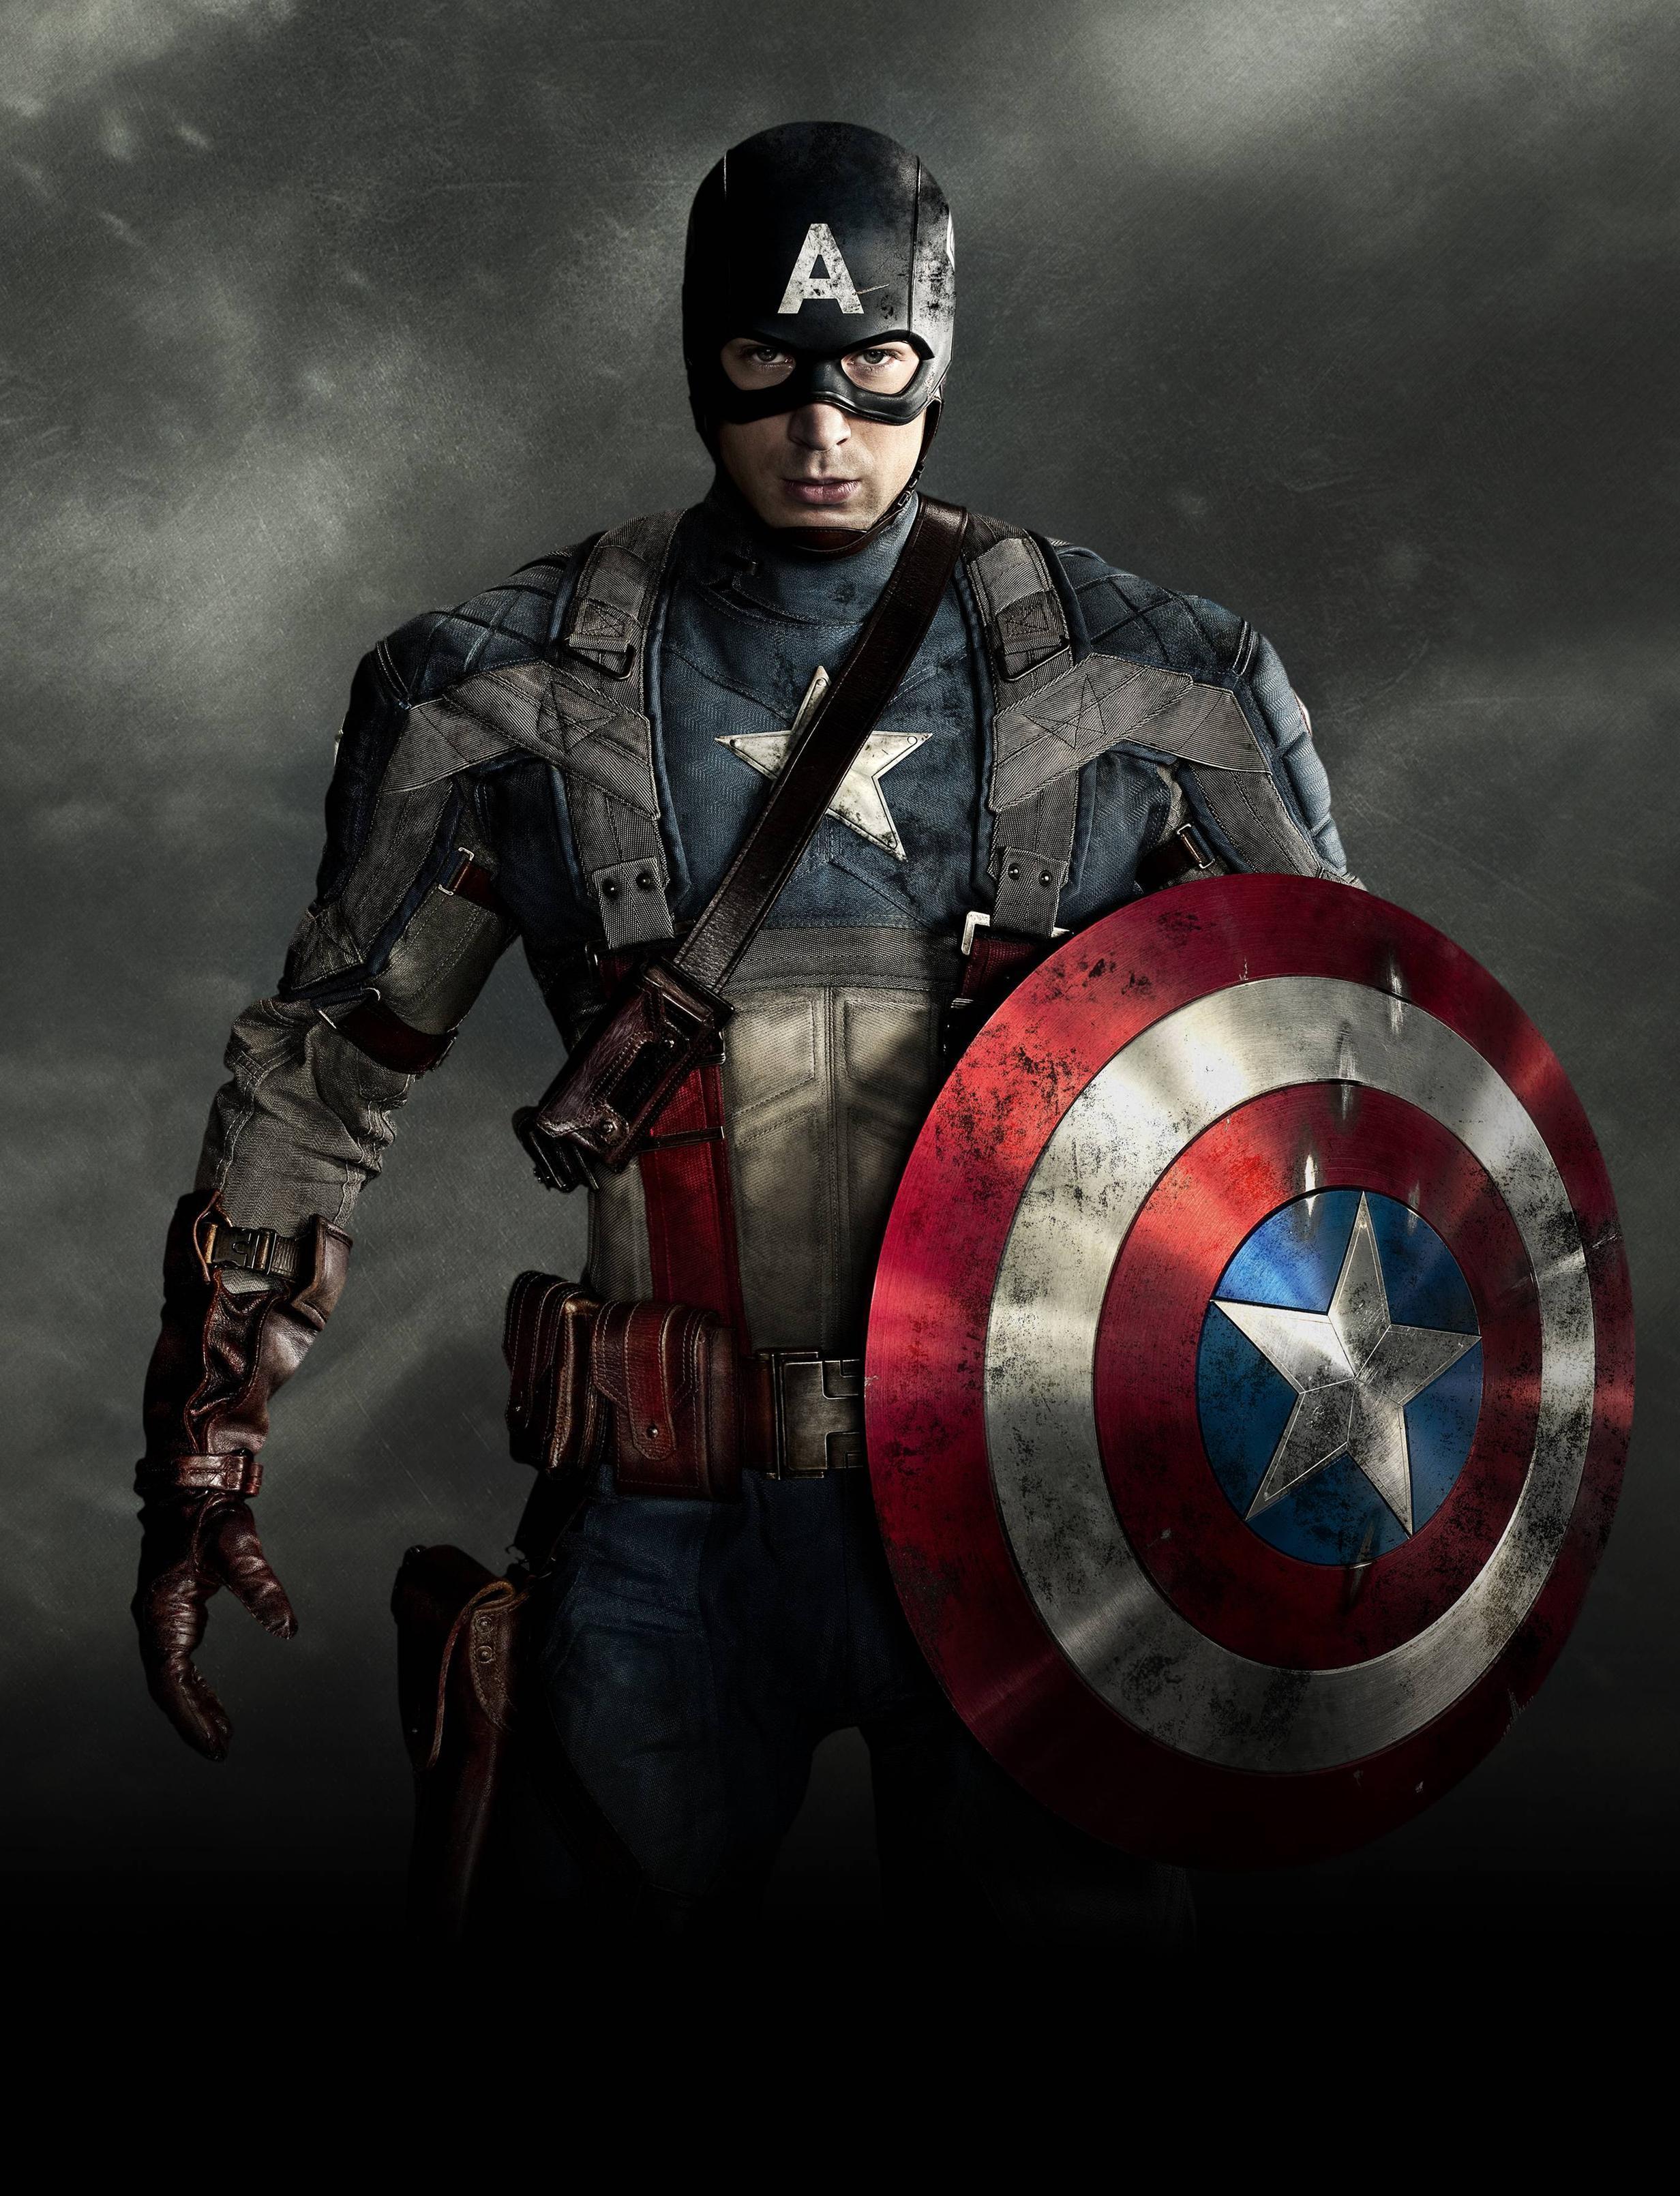 Amazing 46 Wallpaper of Captain America, Top Captain America